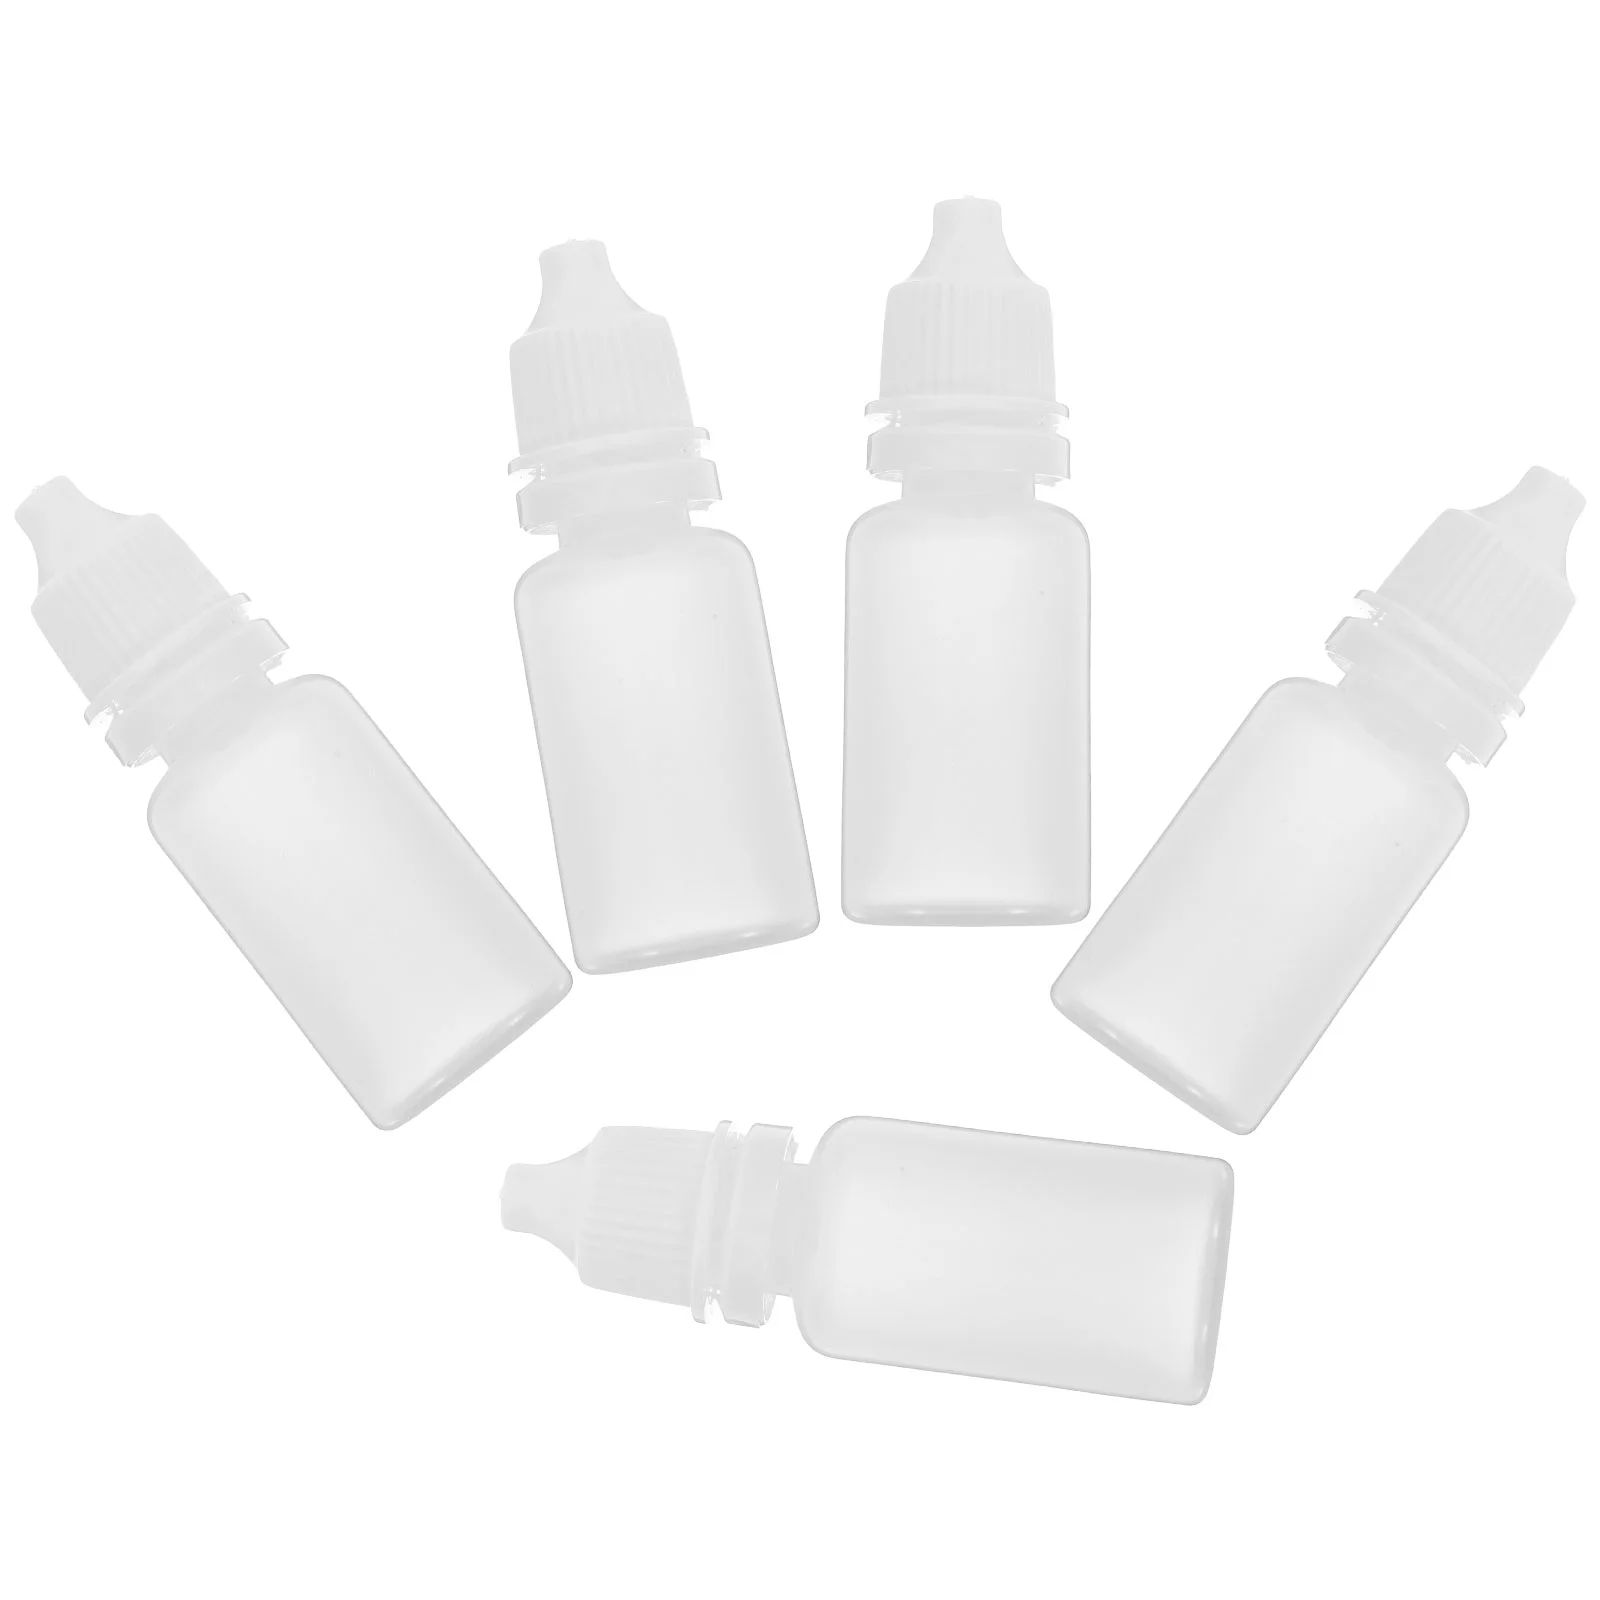 

5Pcs Squeezable Dropper Bottles 10ml Empty Eye Dropper Sample Essential Oil Container Makeup Vial